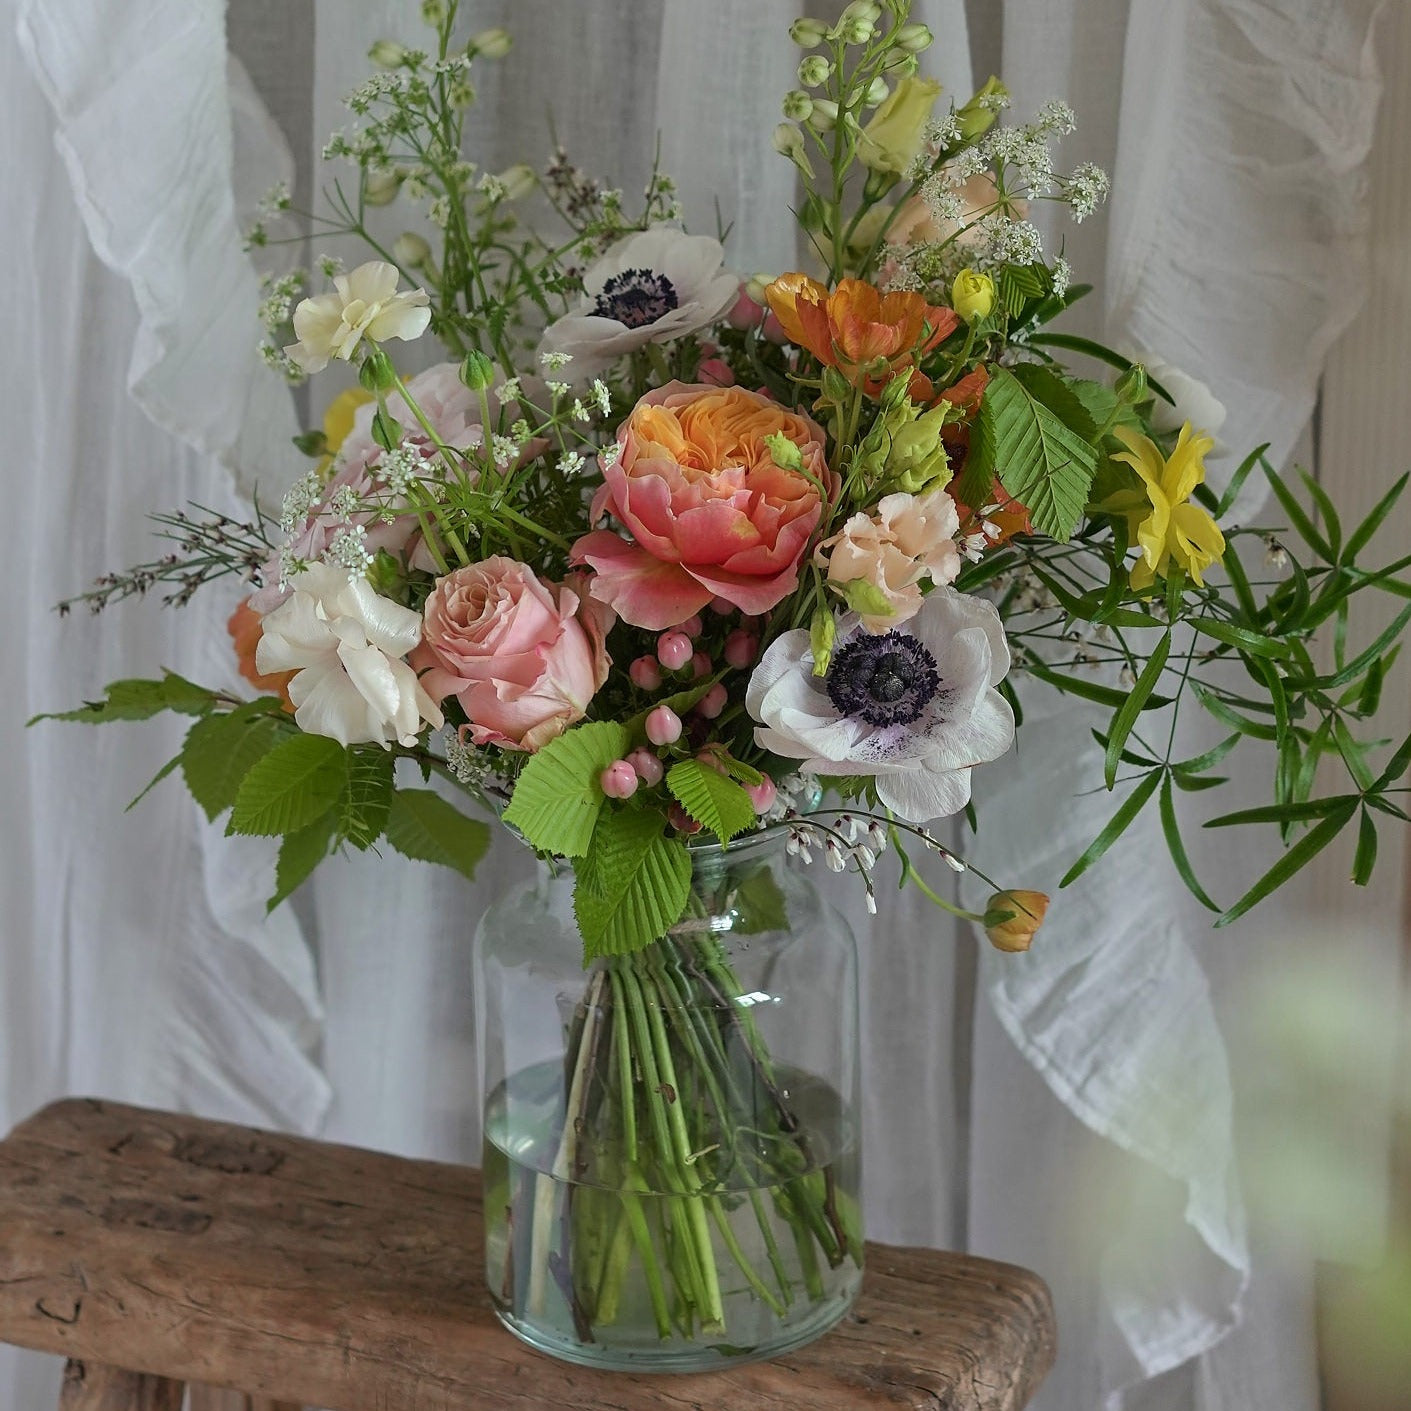 fresh and colourful vase arrangements for summer weddings by Botanique Workshop London